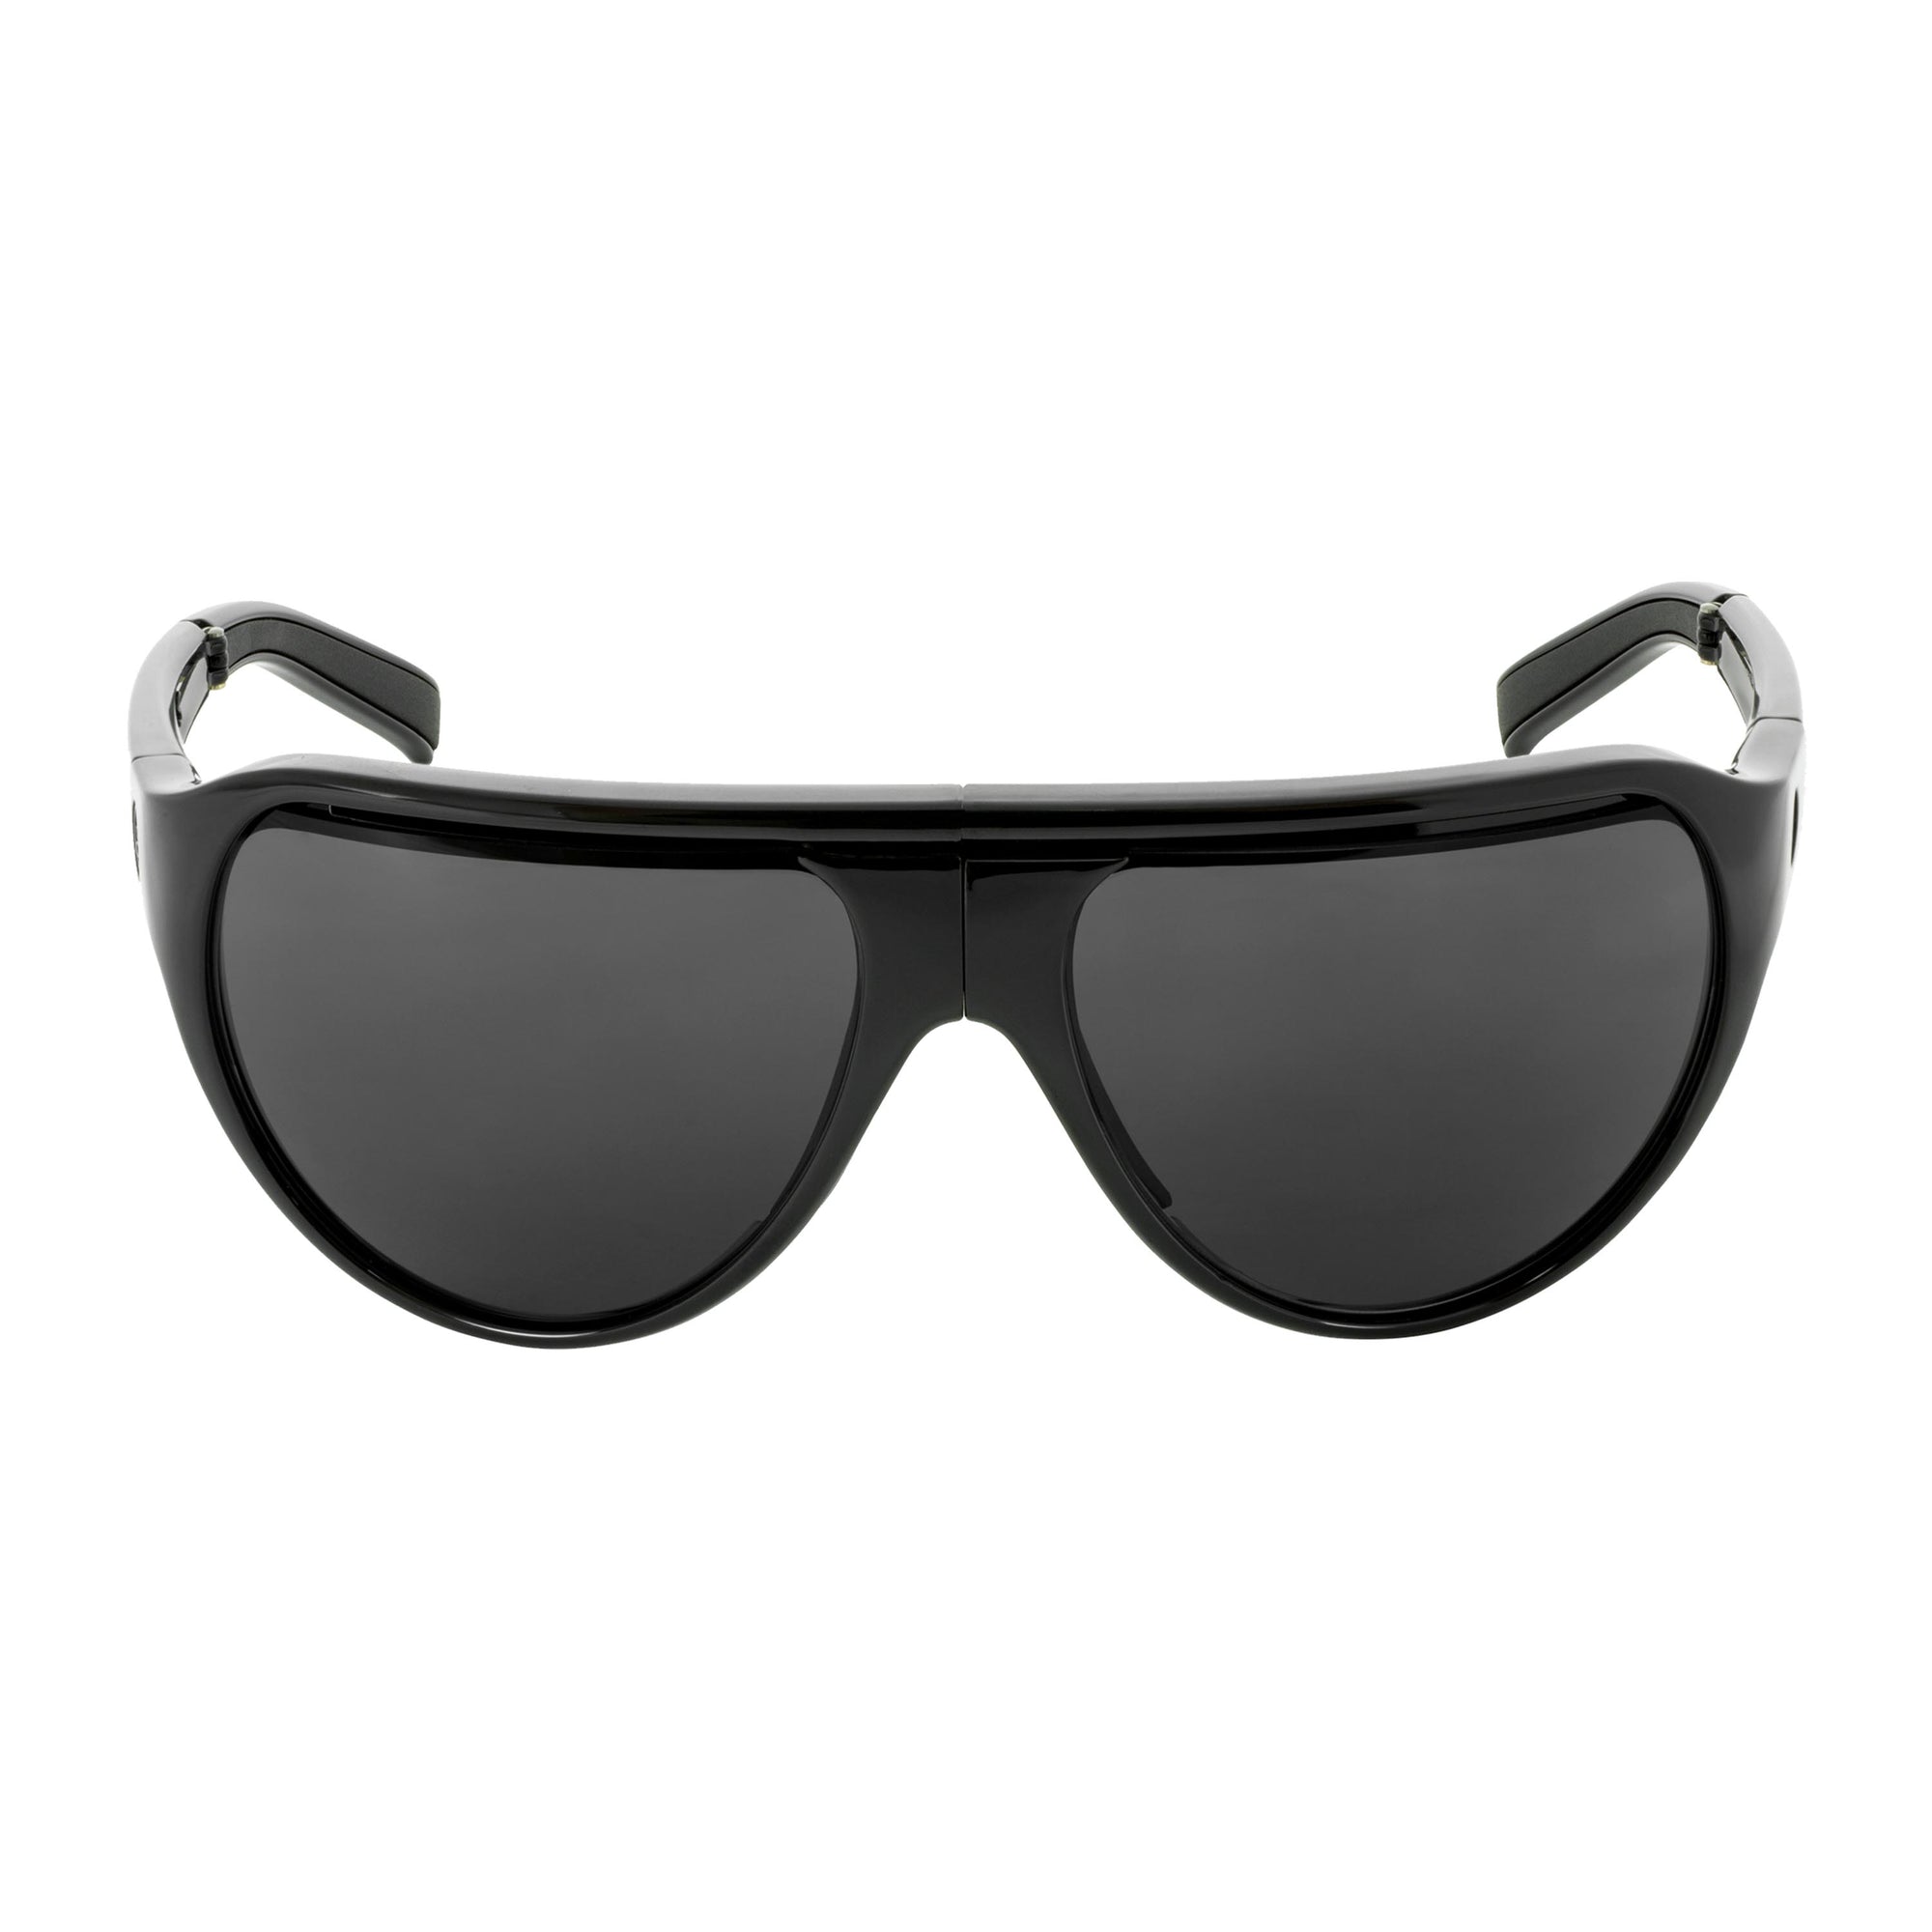 Popticals, Premium Compact Sunglasses, PopAir, 300010-BGGS, Standard Sunglasses, Gloss Black Frame, Gray Lenses, Front Tilt View